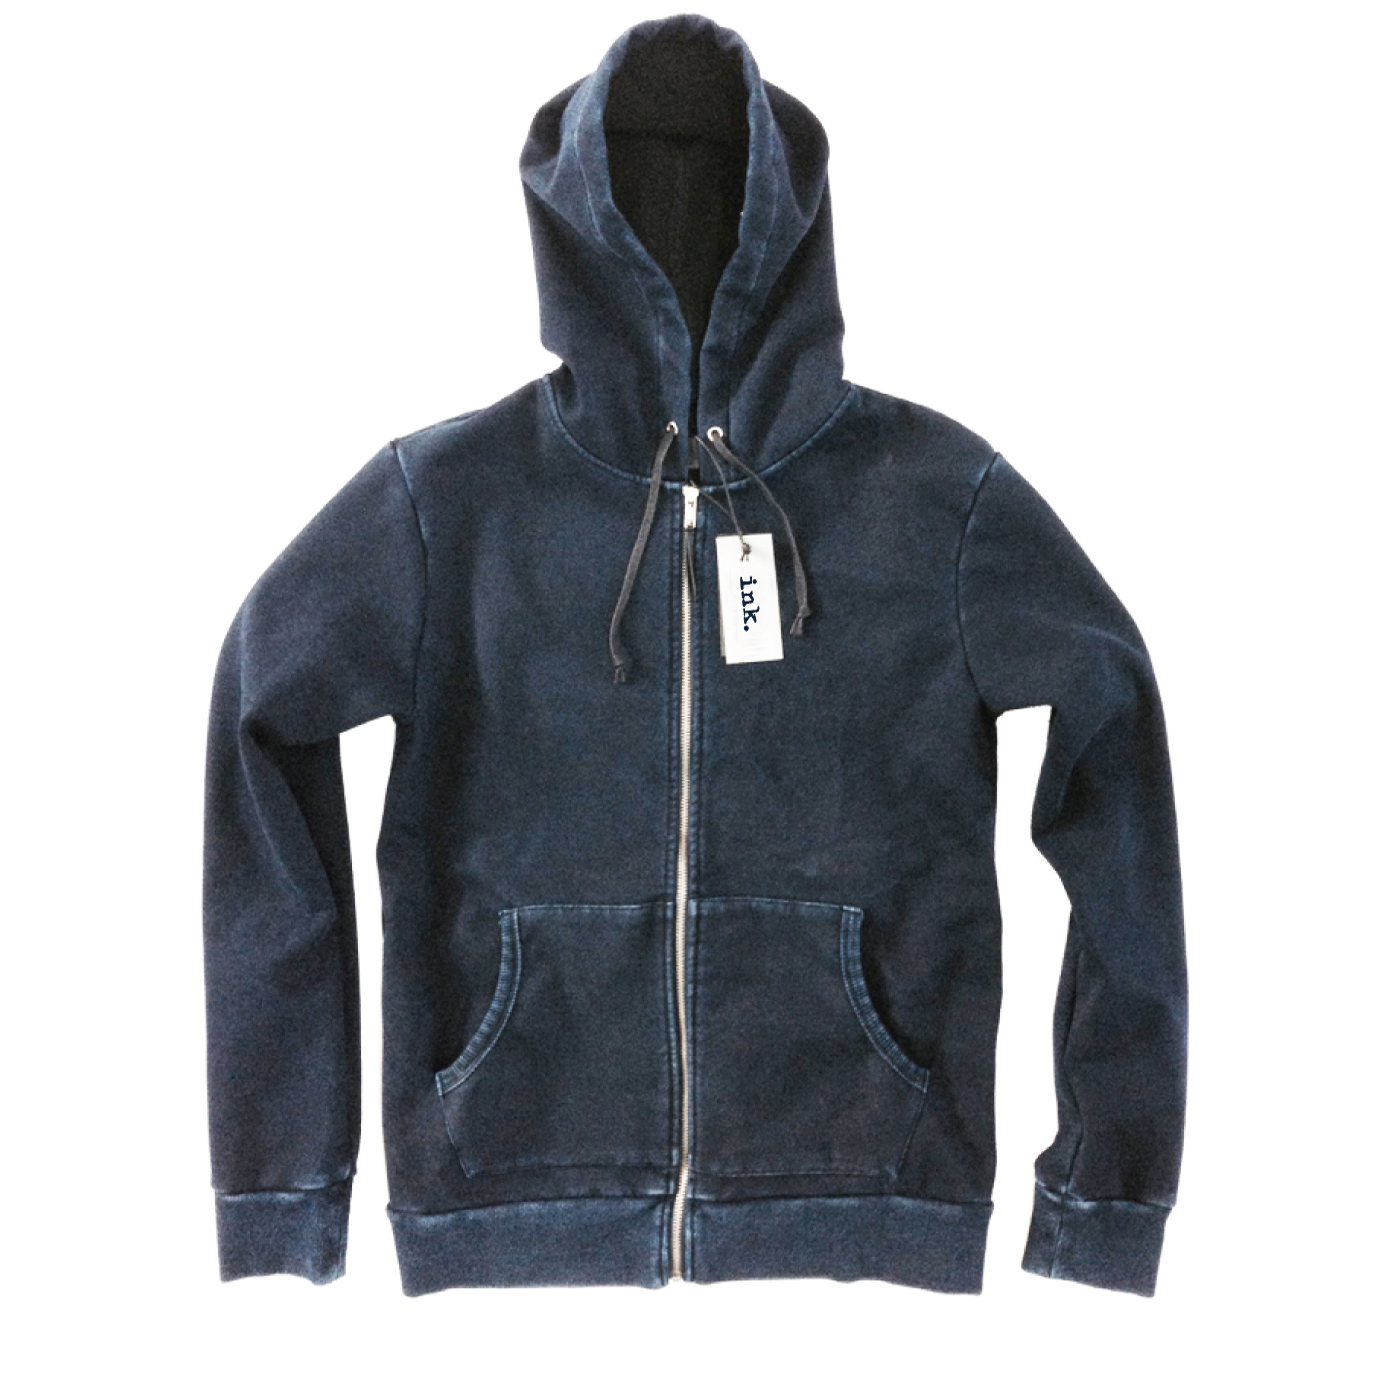 Jackson-indigo-full-zip-hoodie-with-bonded-fleece-copy